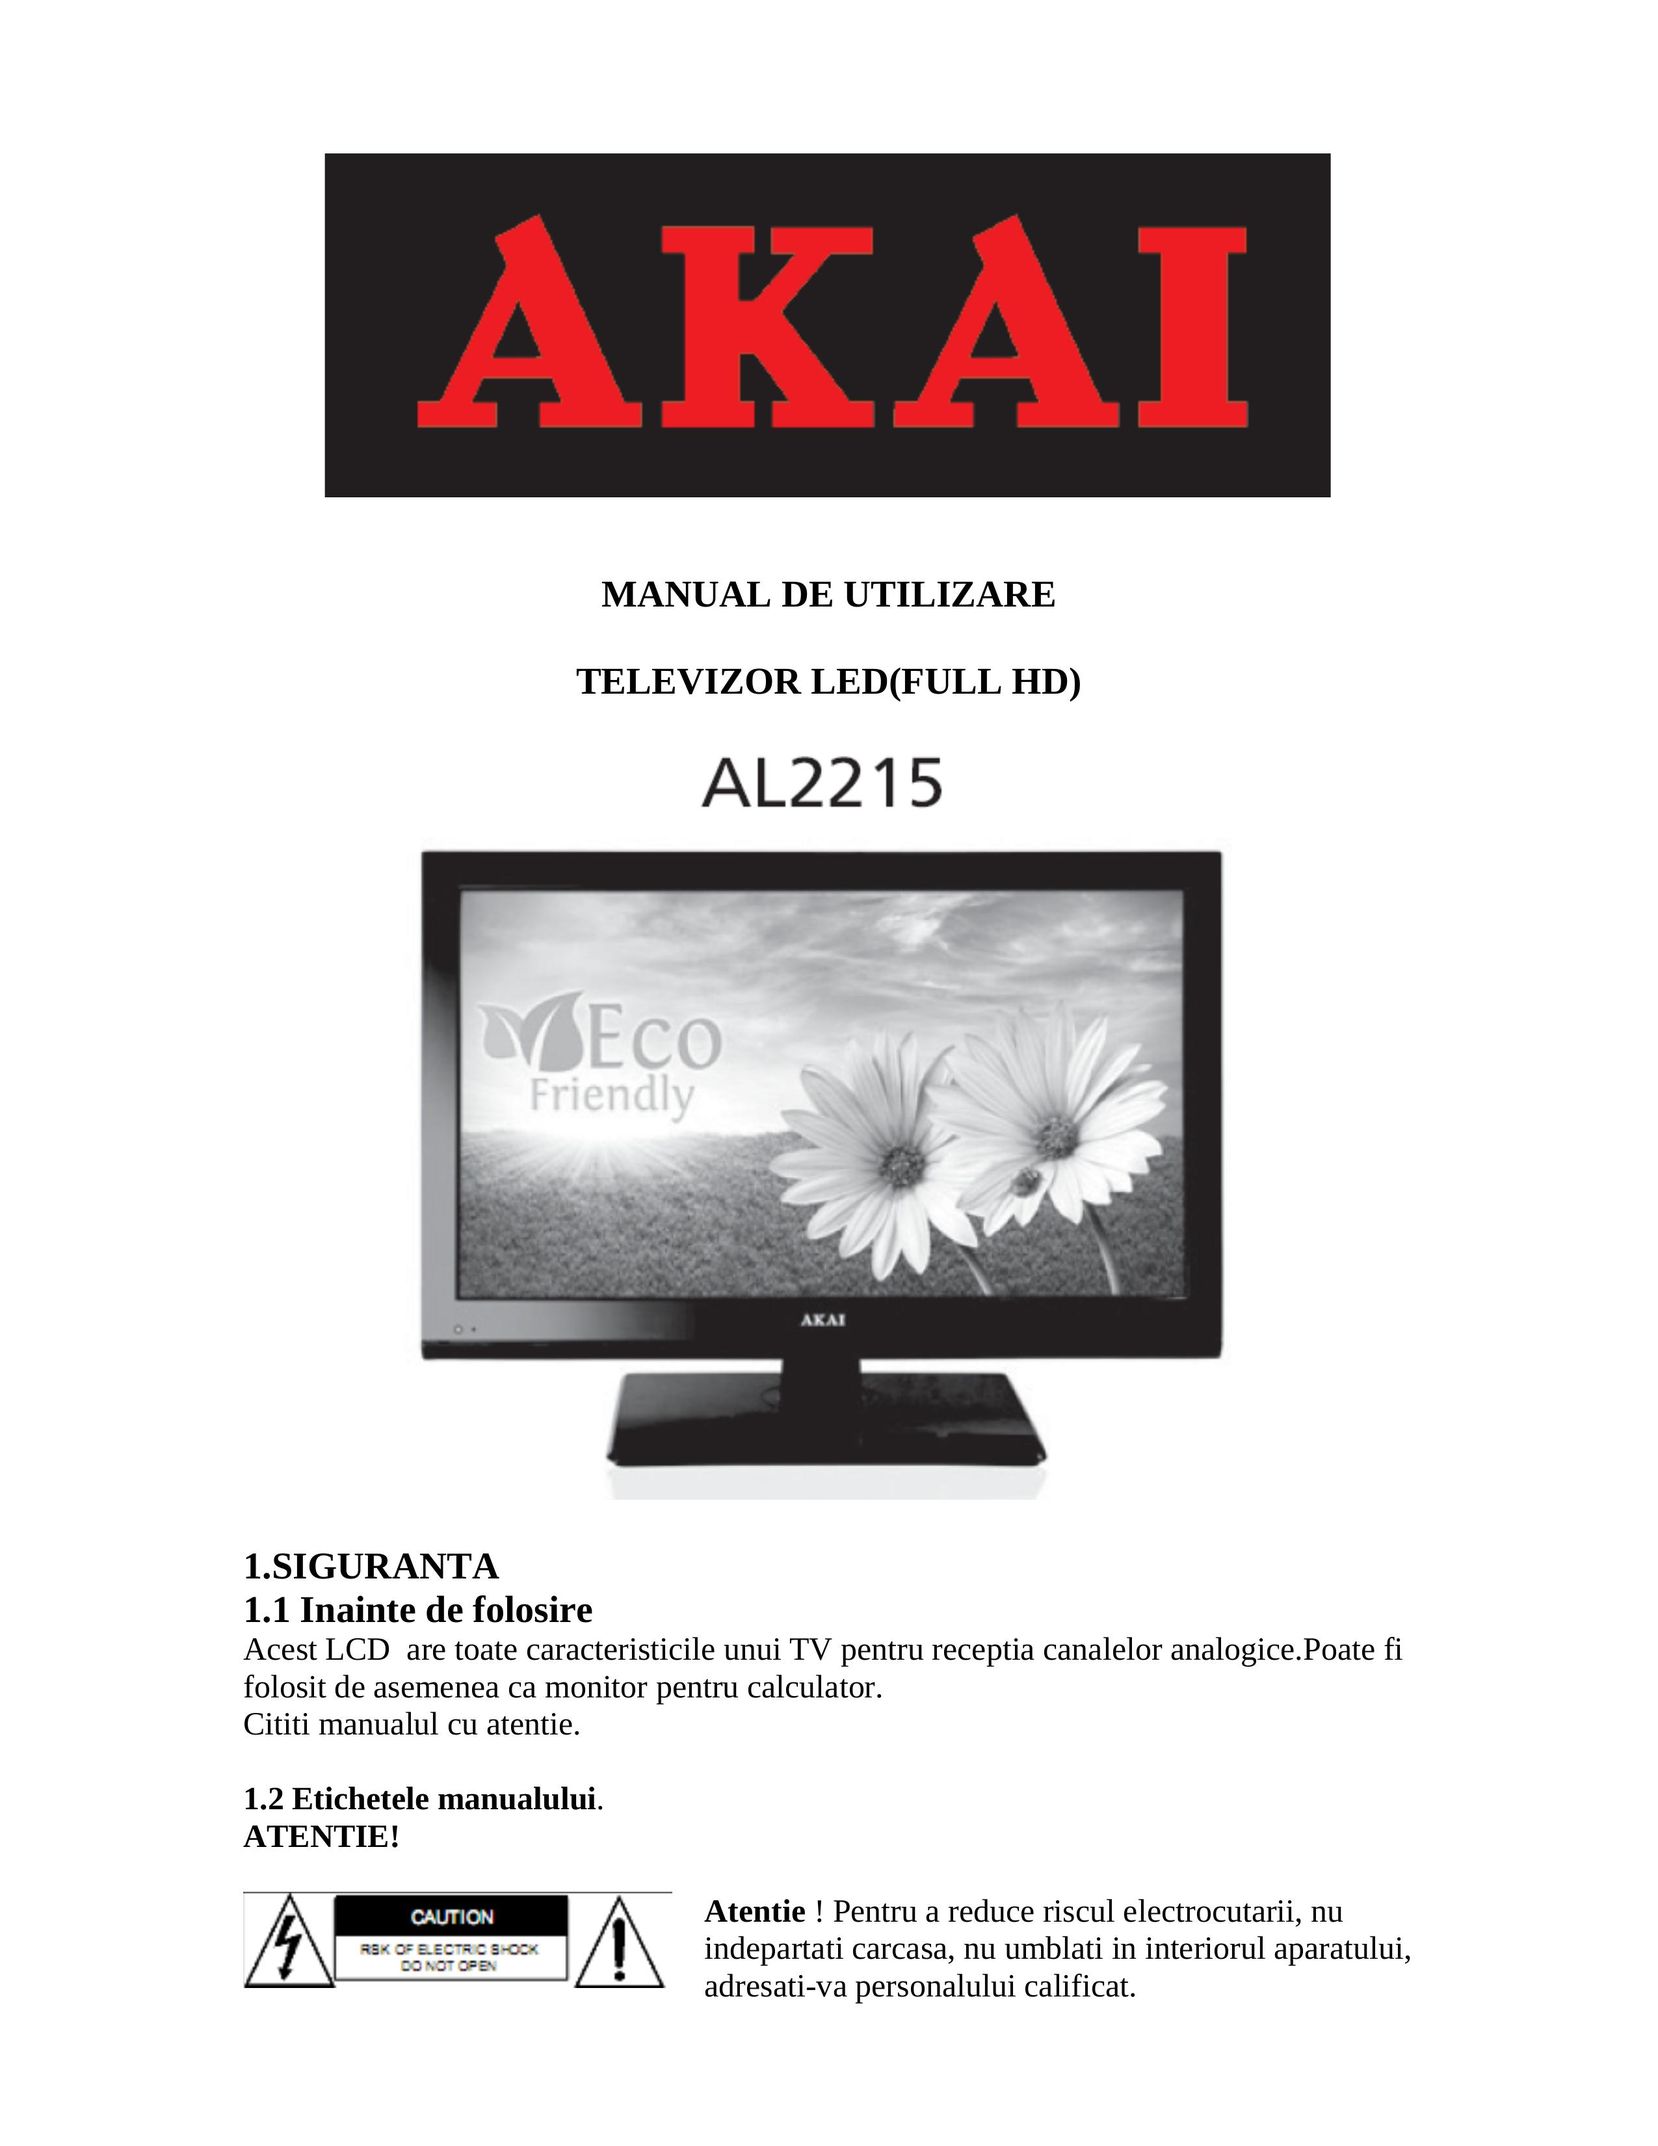 Akai AL2215 Flat Panel Television User Manual